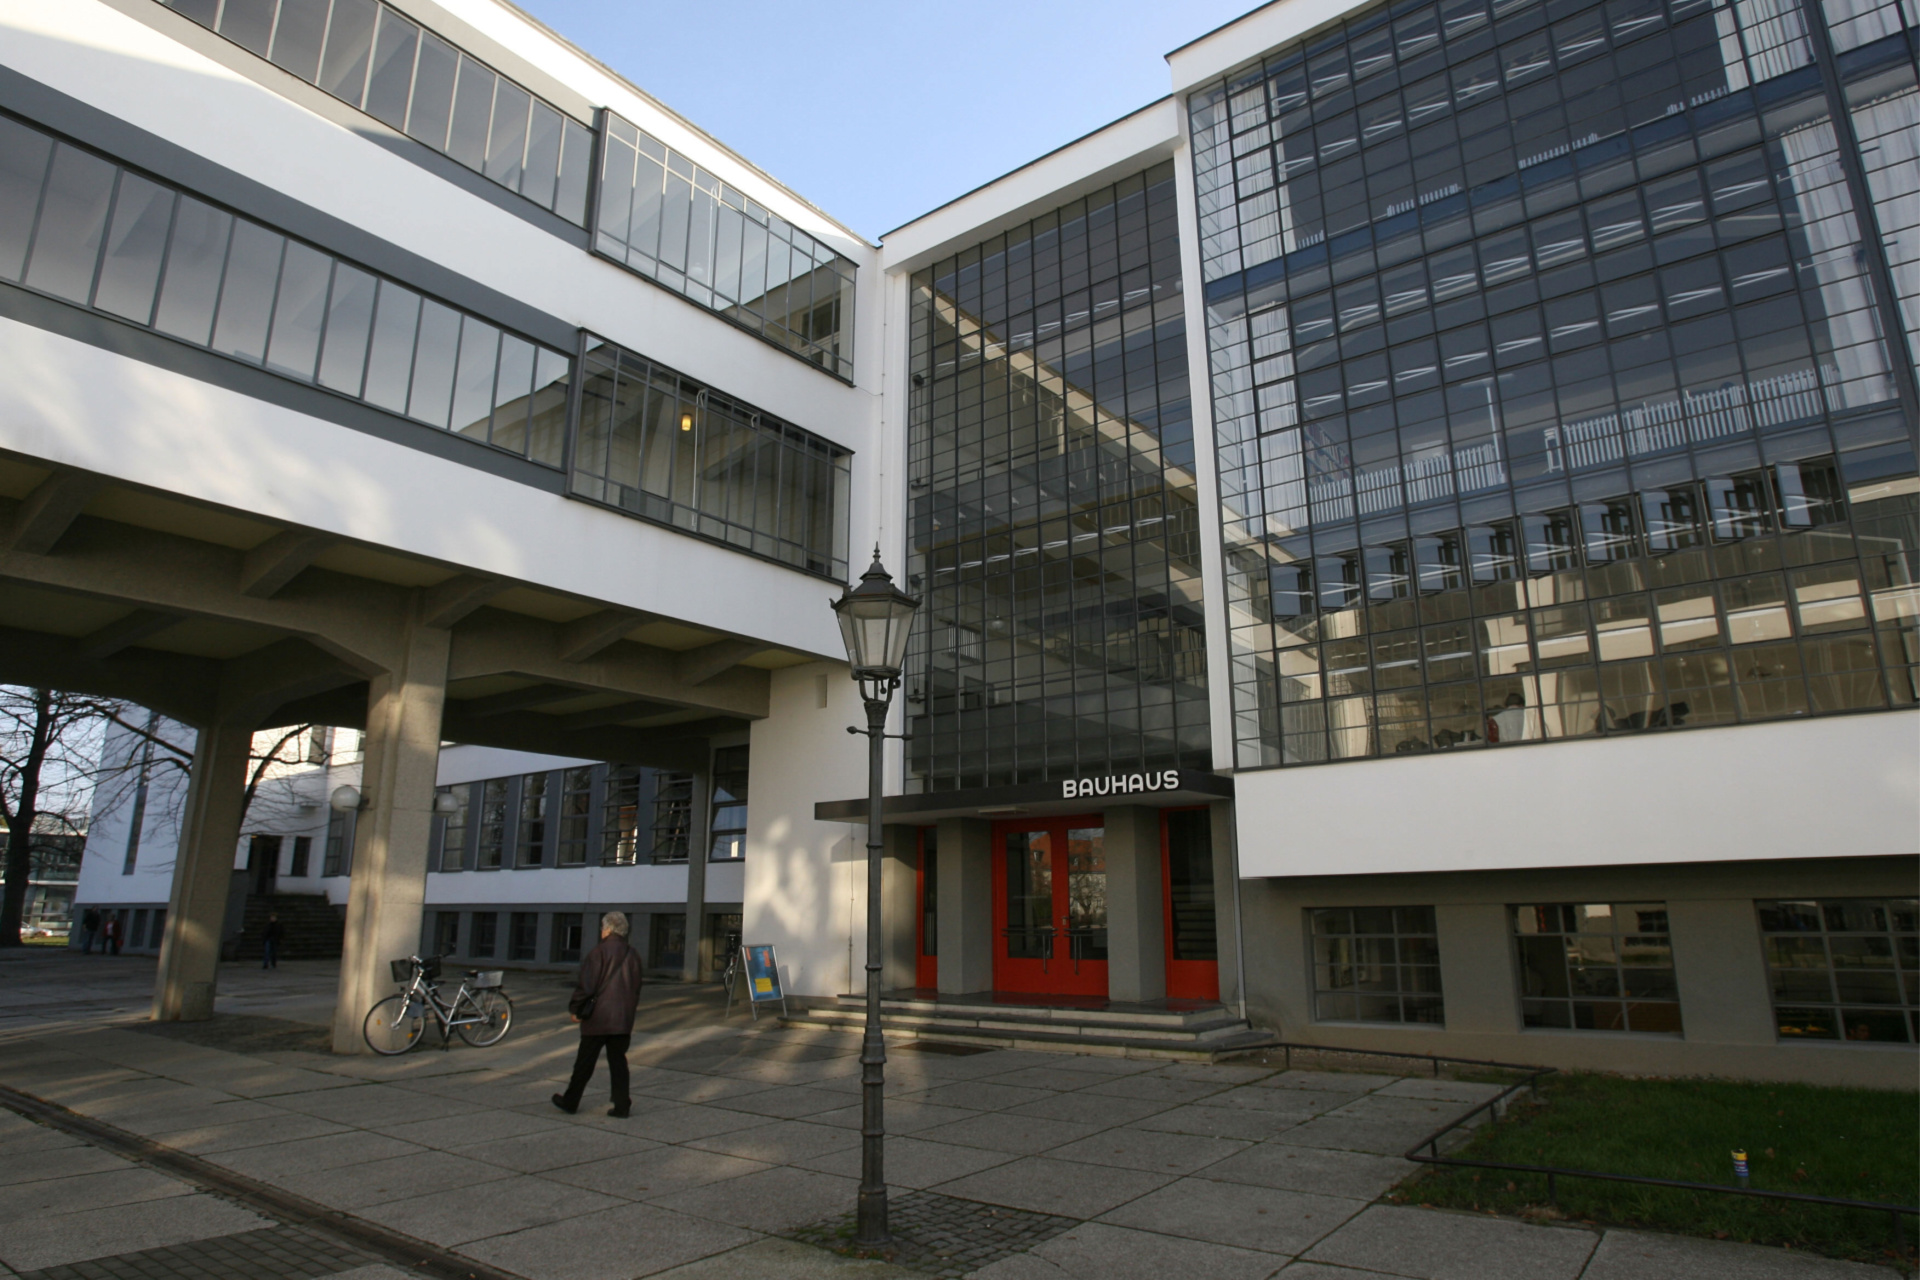 Bauhaus building in Dessau edit afp